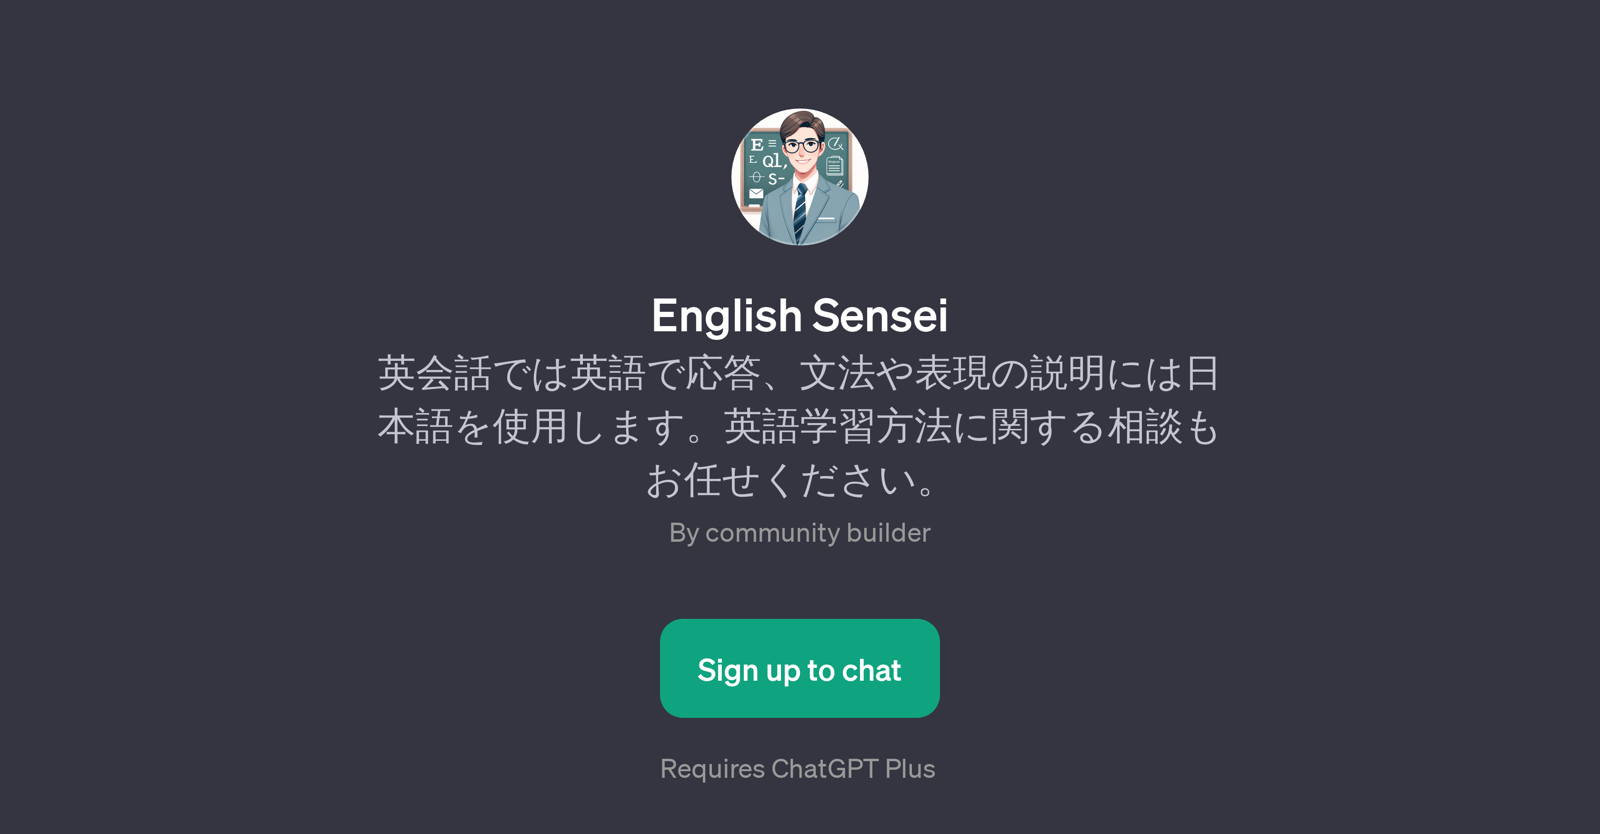 English Sensei website